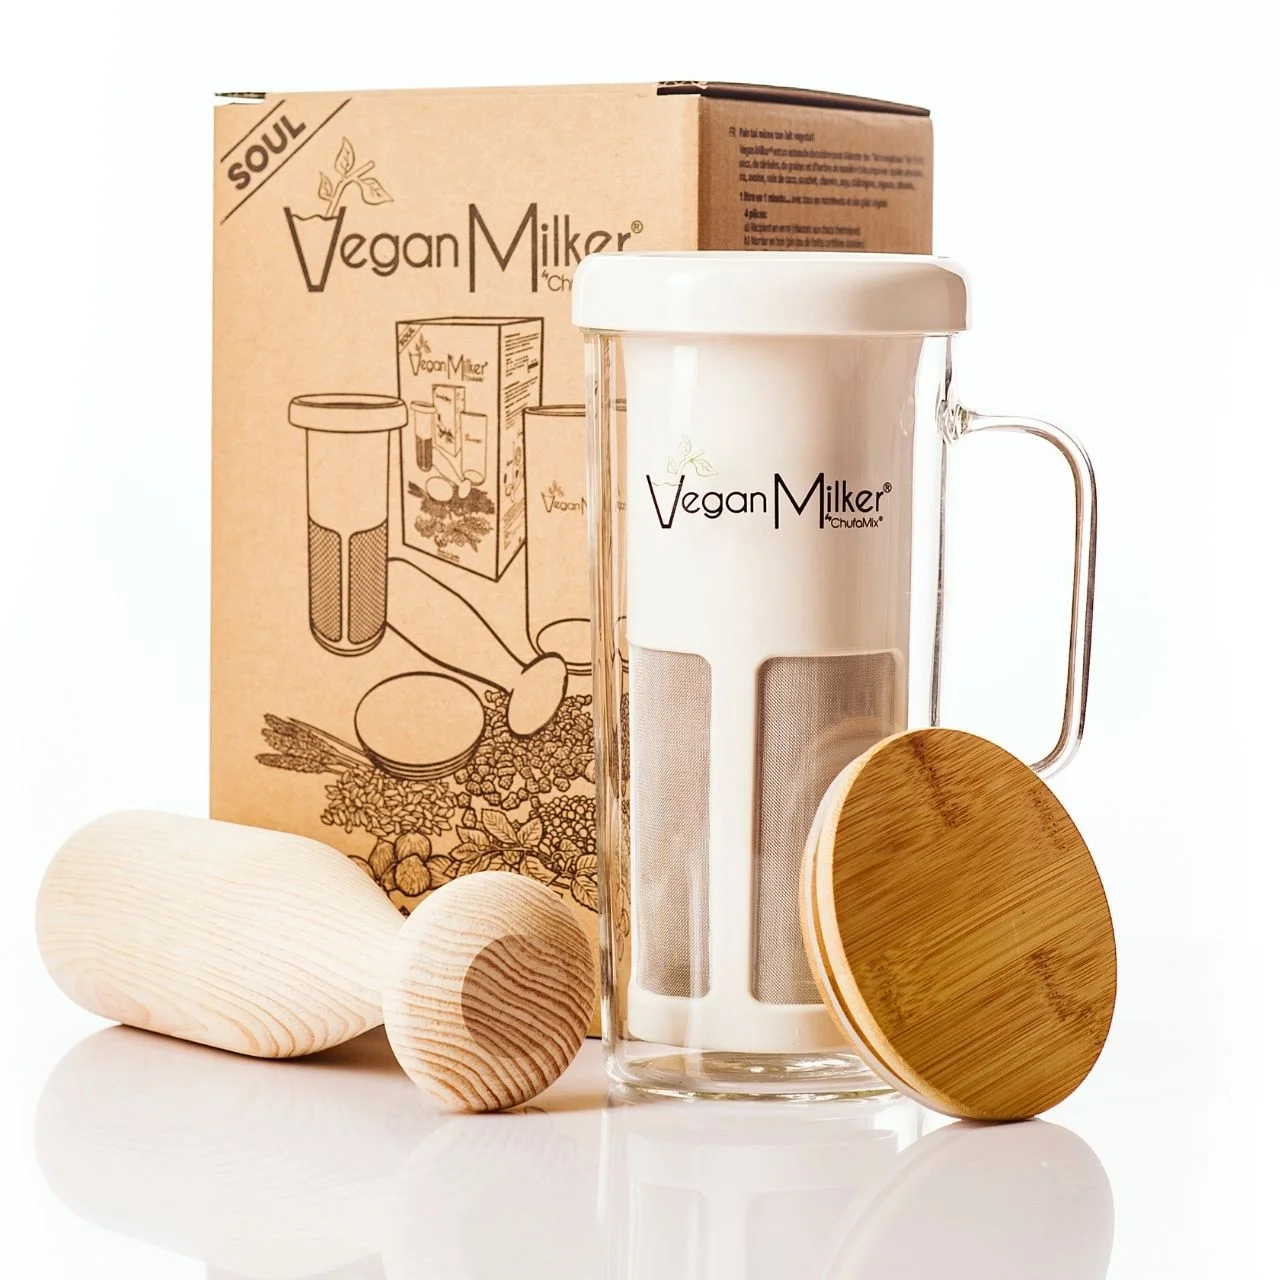  Vegan Milker by Chufamix, kitchen tool to make Plant